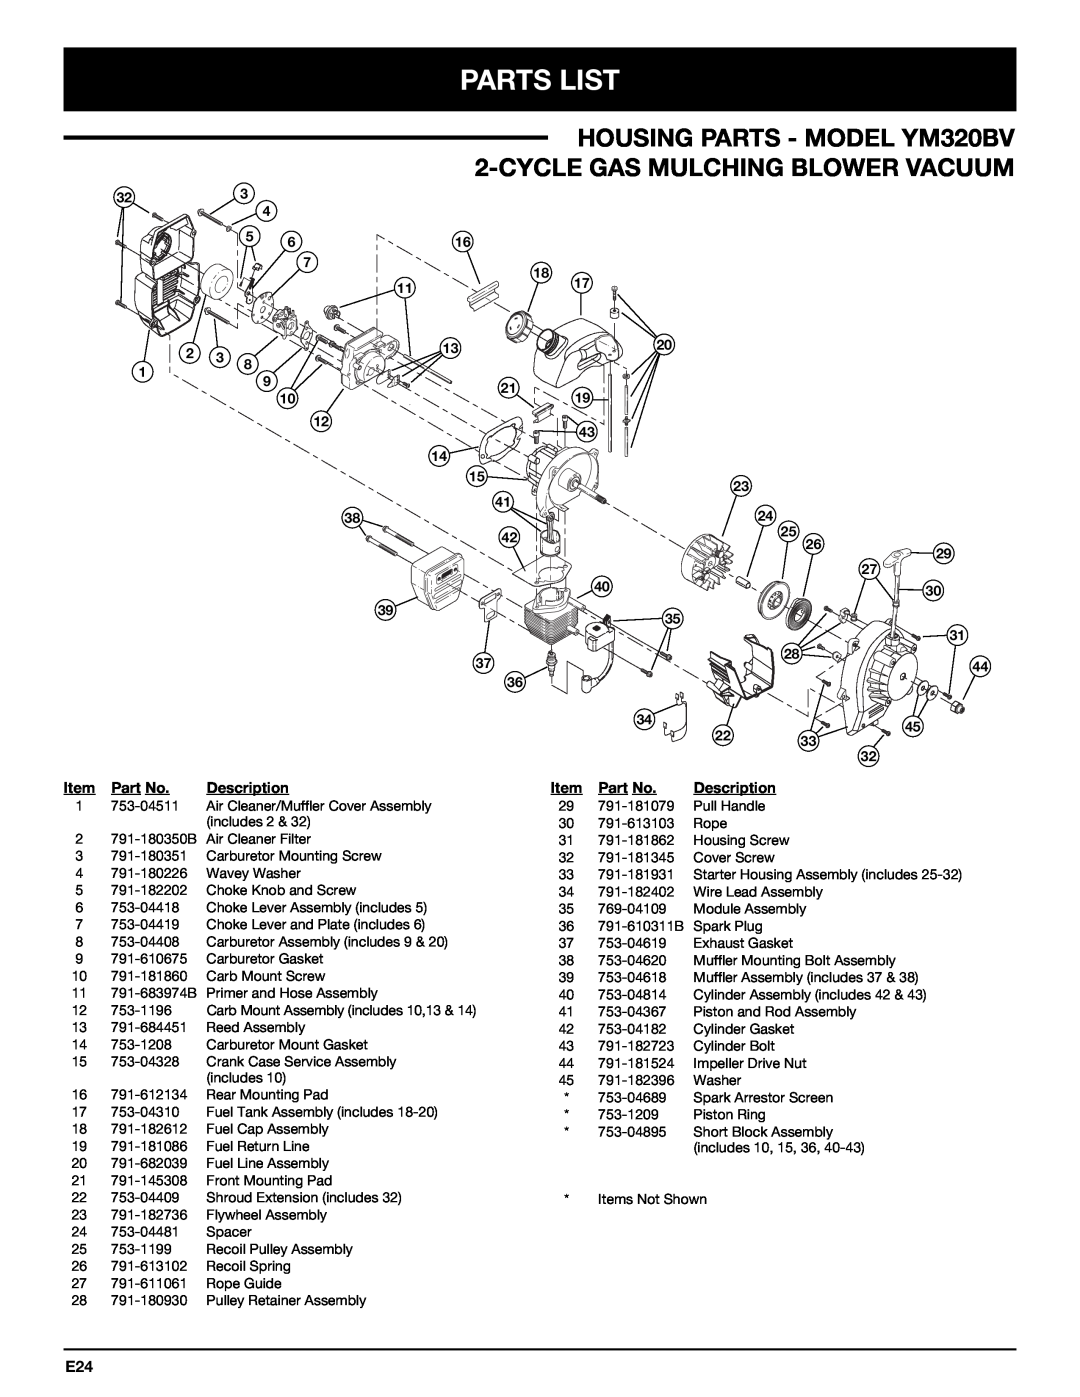 Bolens YM320BV manual Parts List 